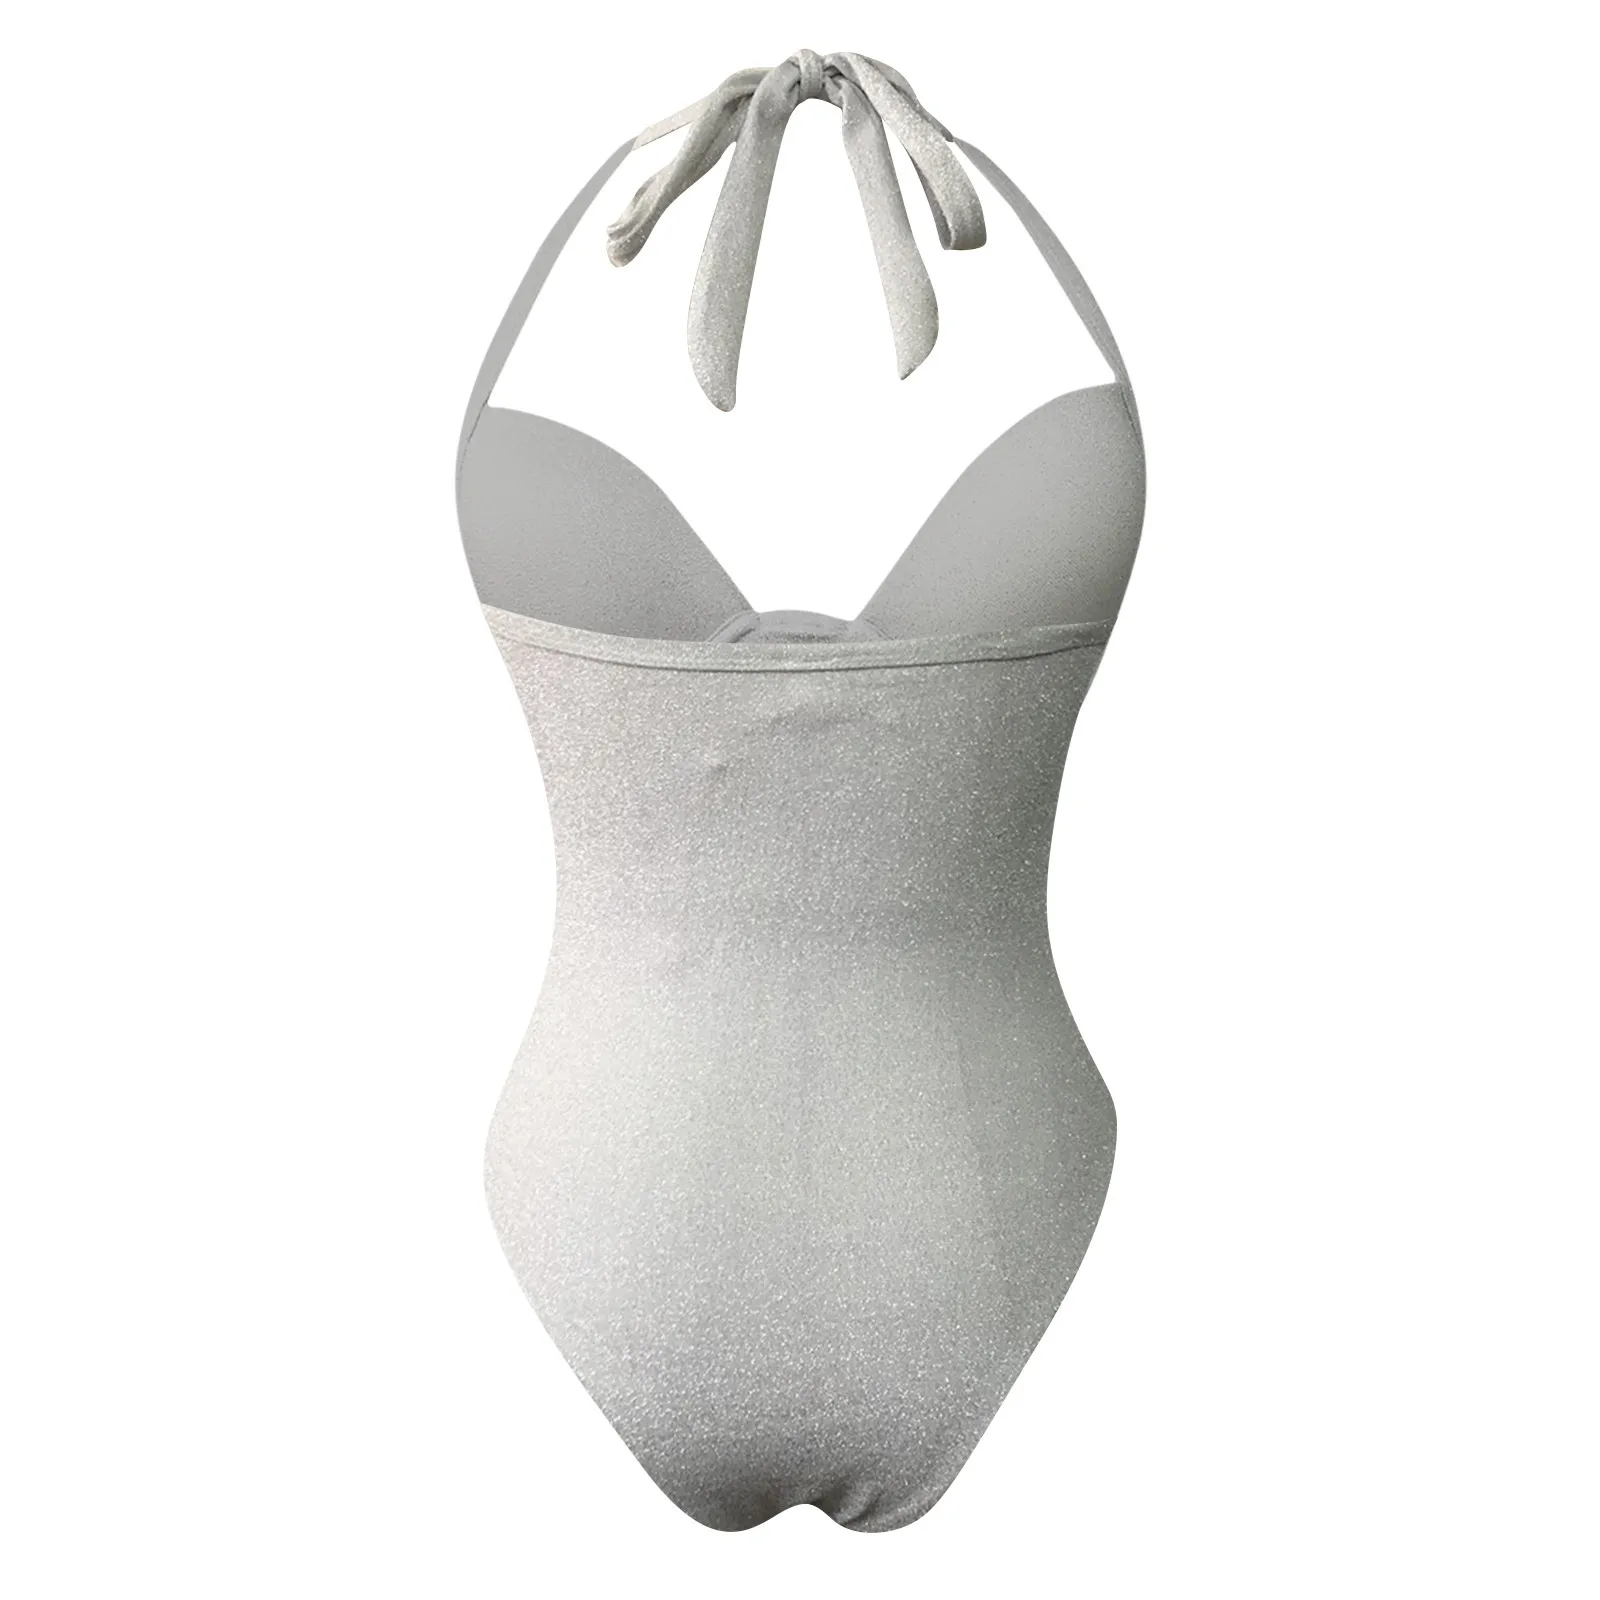 2022 High Waist Backless Bikinis For Women Solid Color Strap One Piece Swimsuit Push Up Hard Cup Bikini Bathing Suit Beach Wear bikini cover up